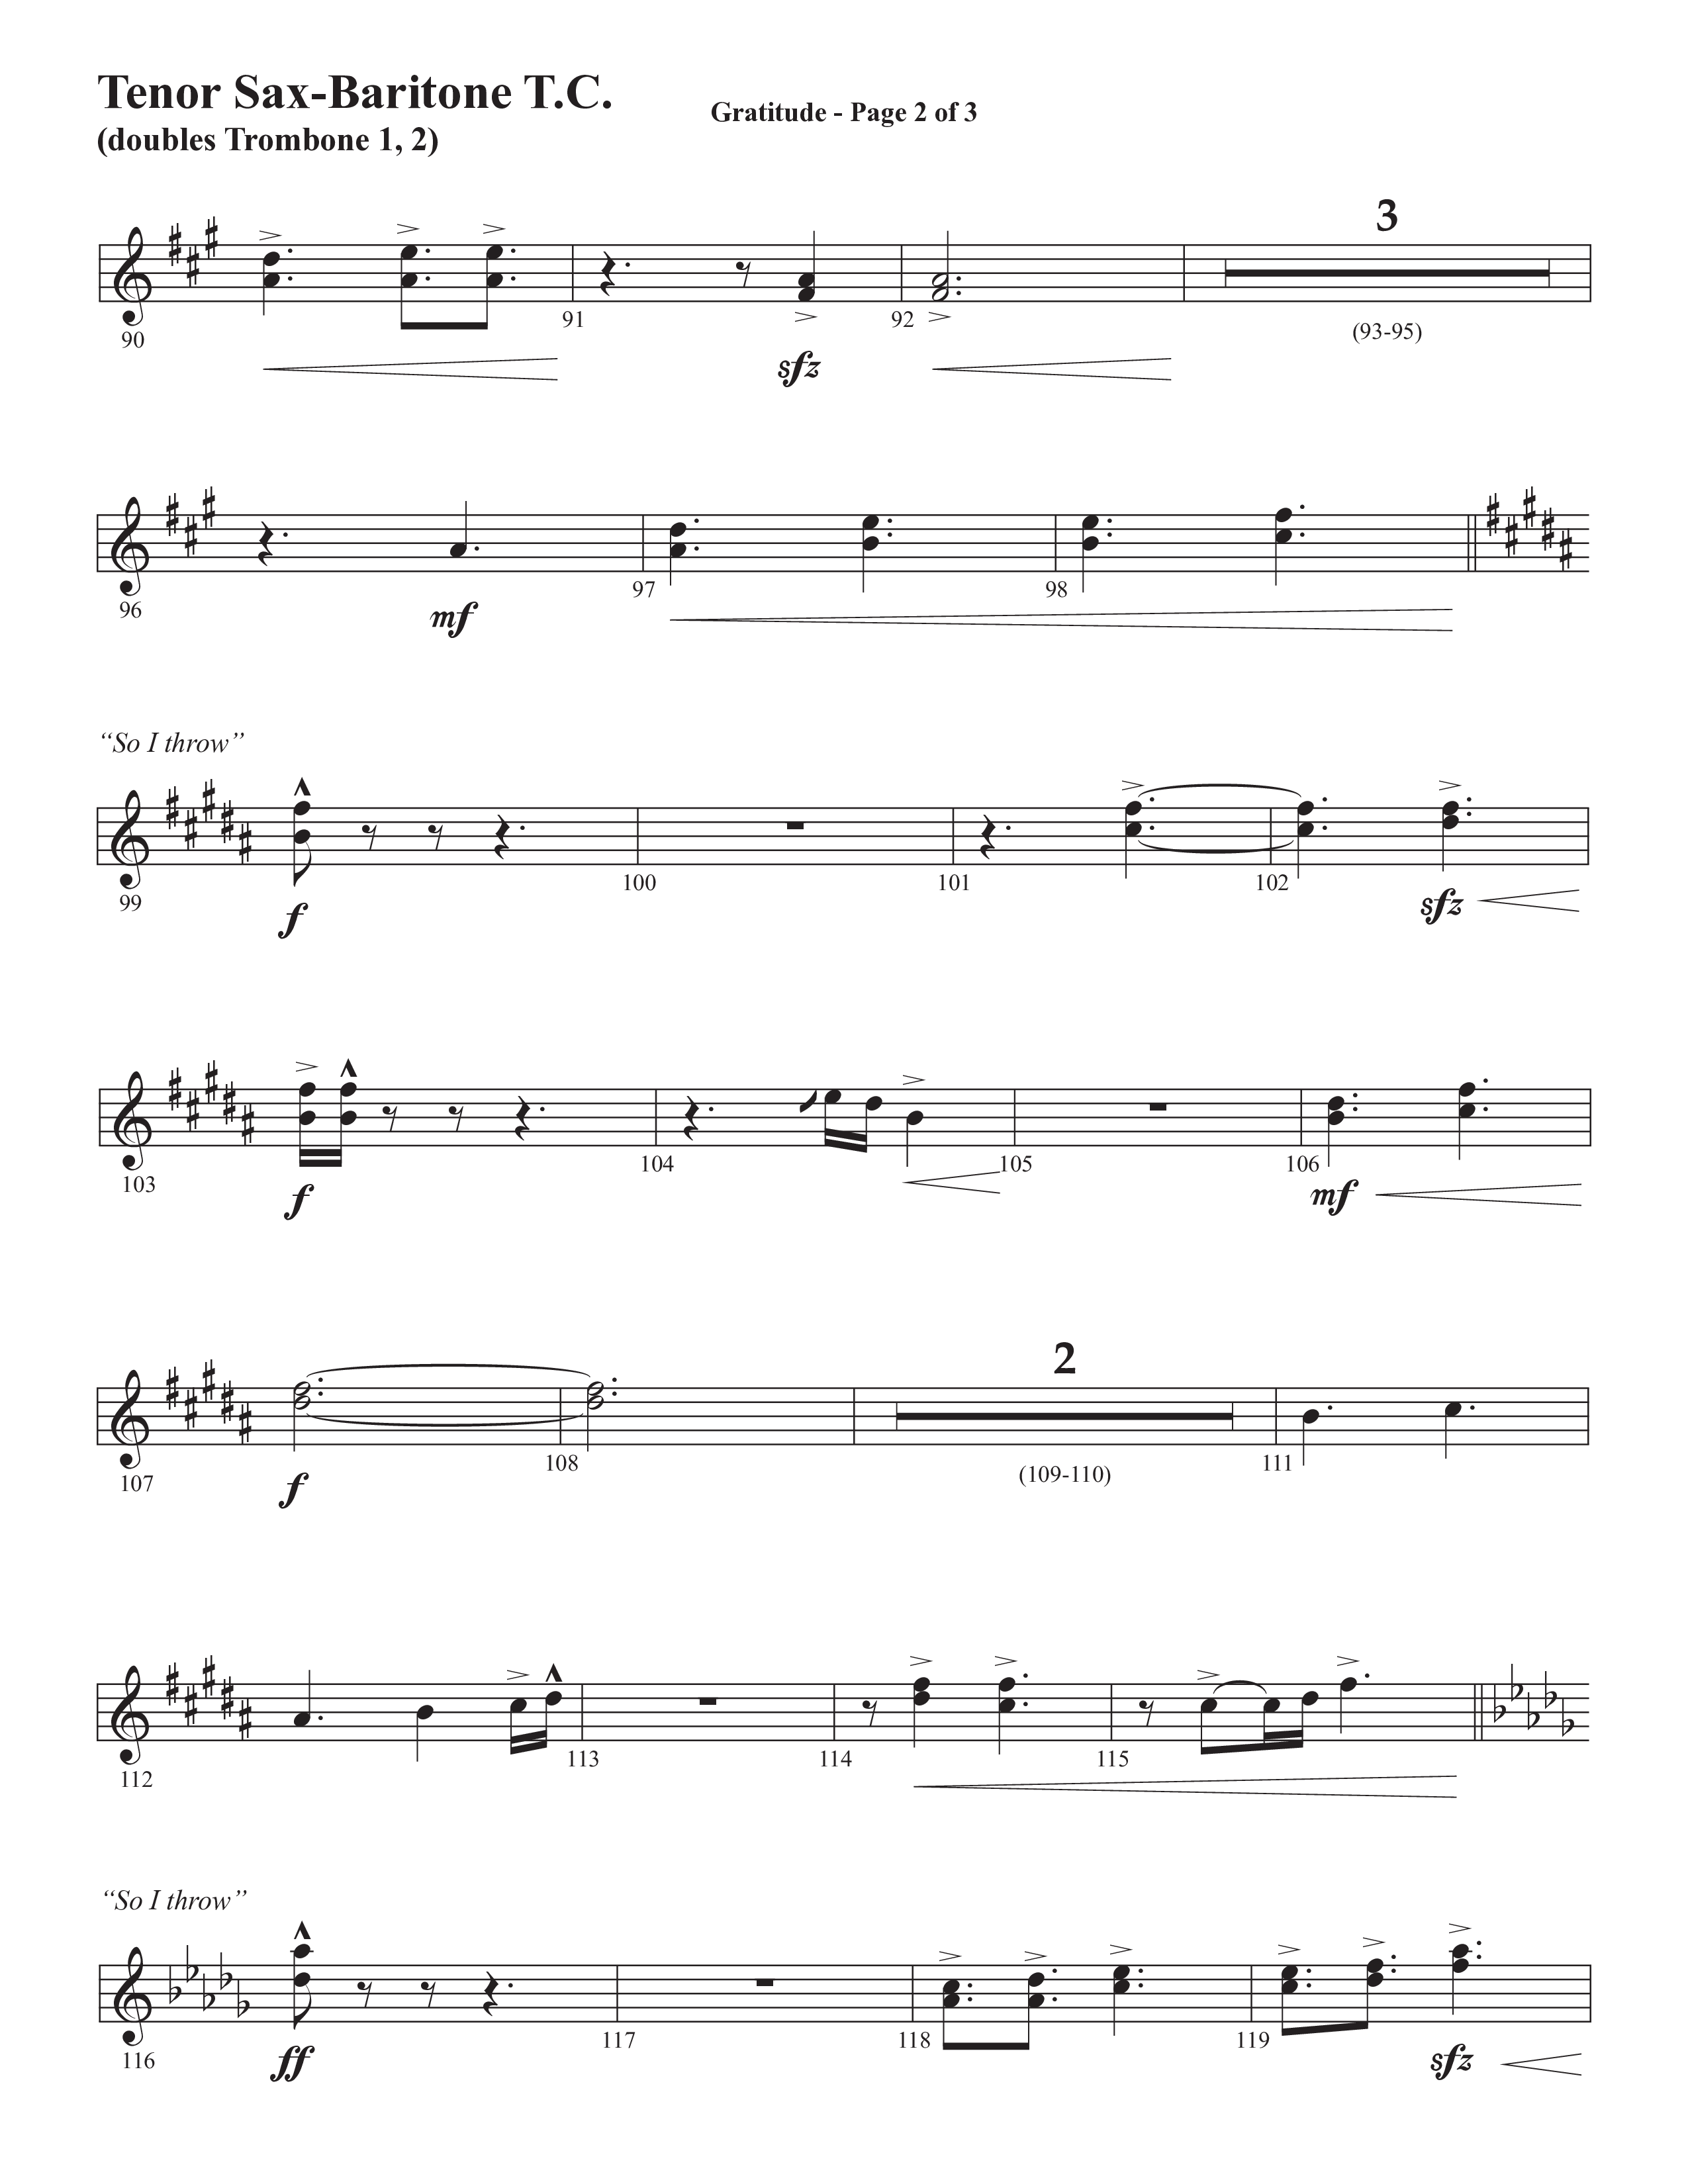 Gratitude (Choral Anthem SATB) Tenor Sax/Baritone T.C. (Semsen Music / Arr. John Bolin / Orch. Cliff Duren)